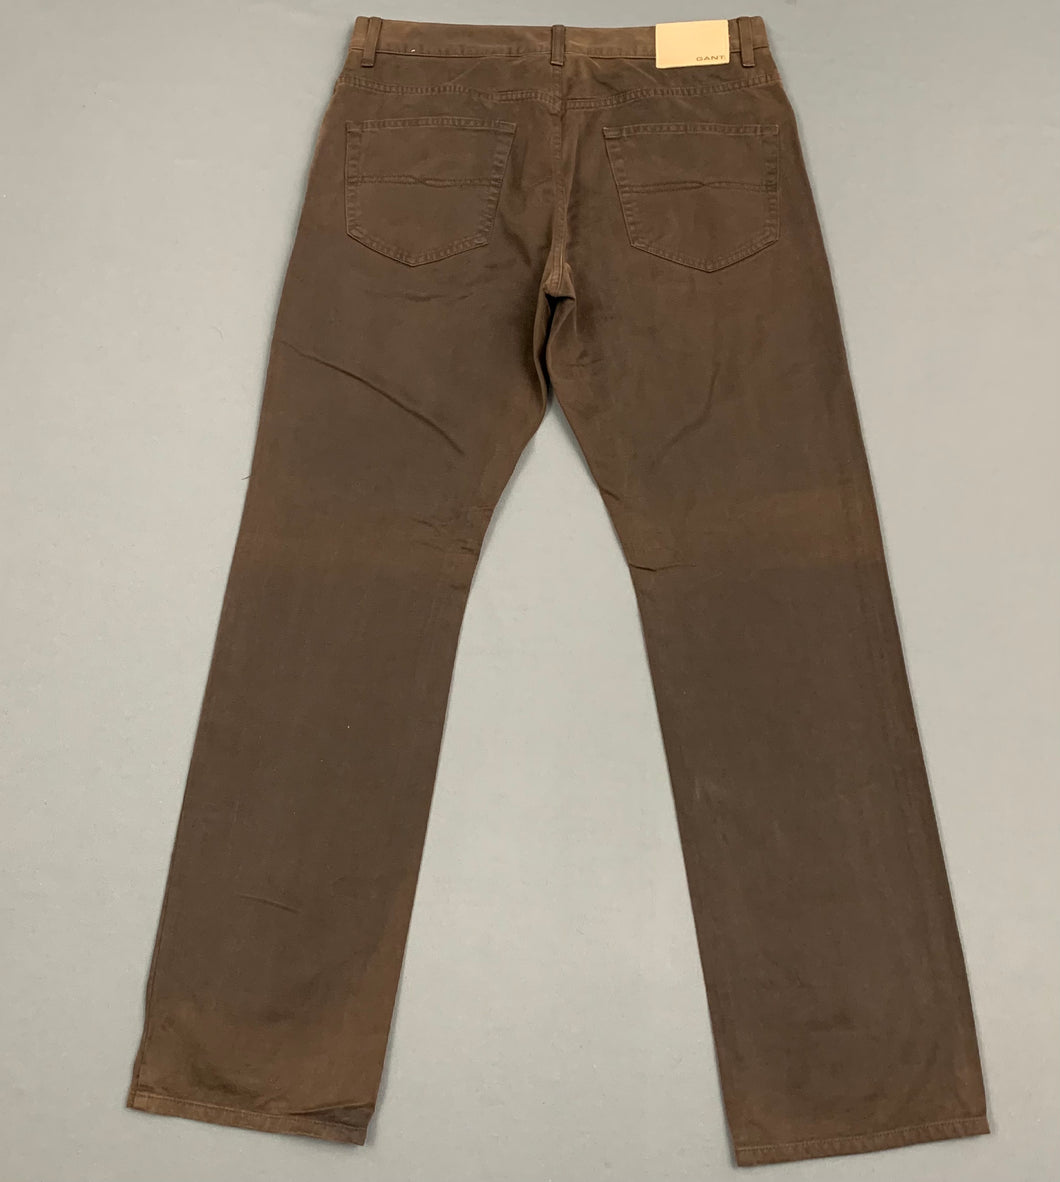 GANT TYLER JEANS - Brown Denim - Regular Fit - Mens Size Waist 34